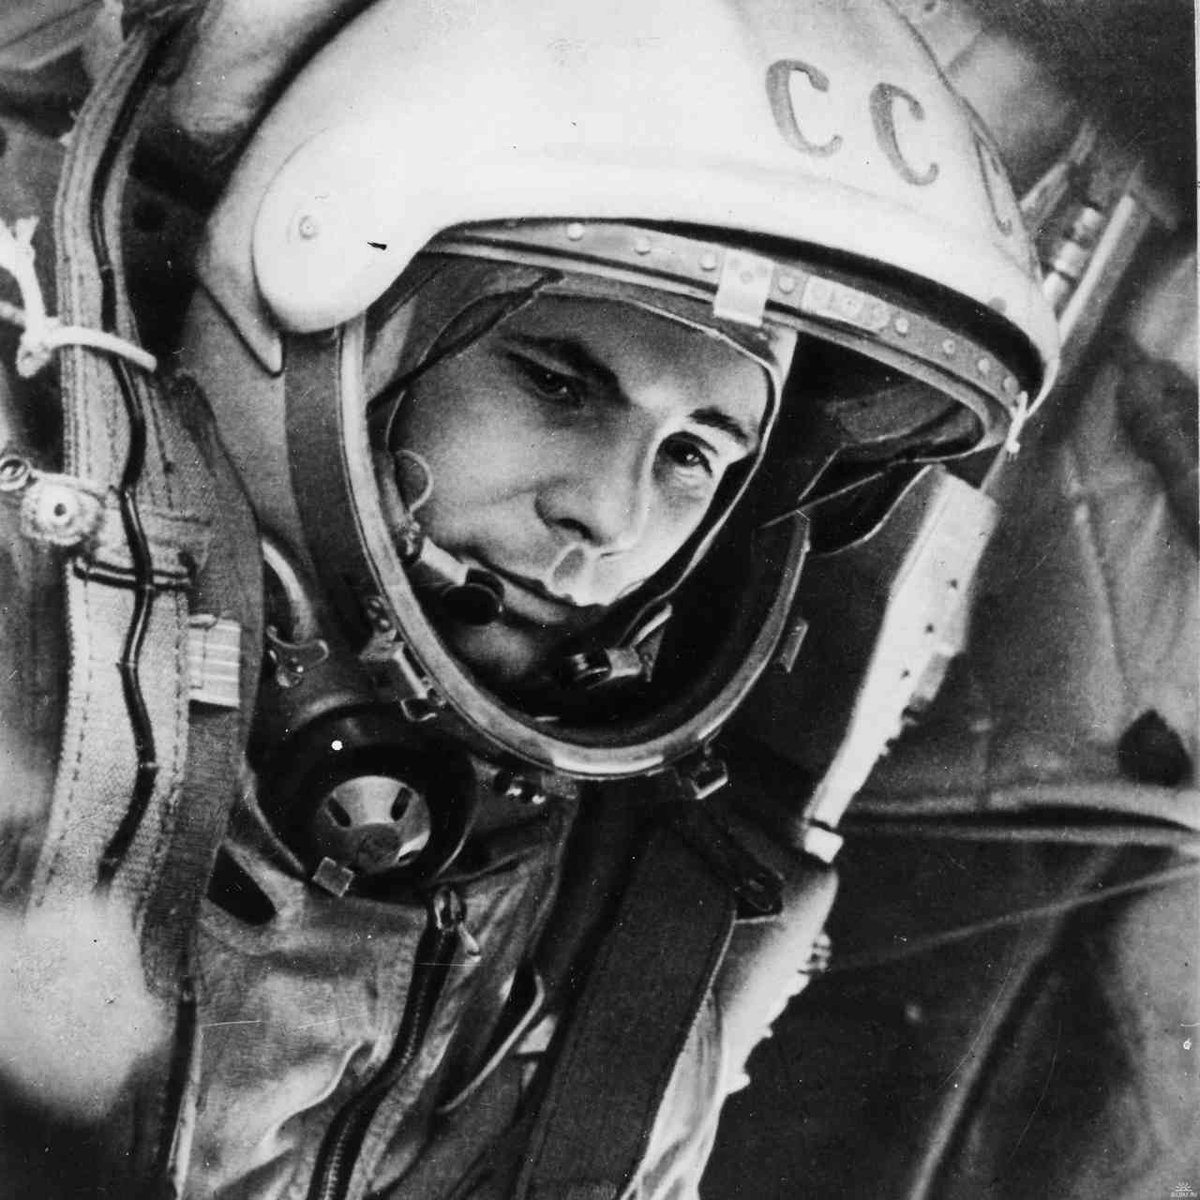 Yuri Gagarin. First man in space. 
#HumanSpaceflightDay